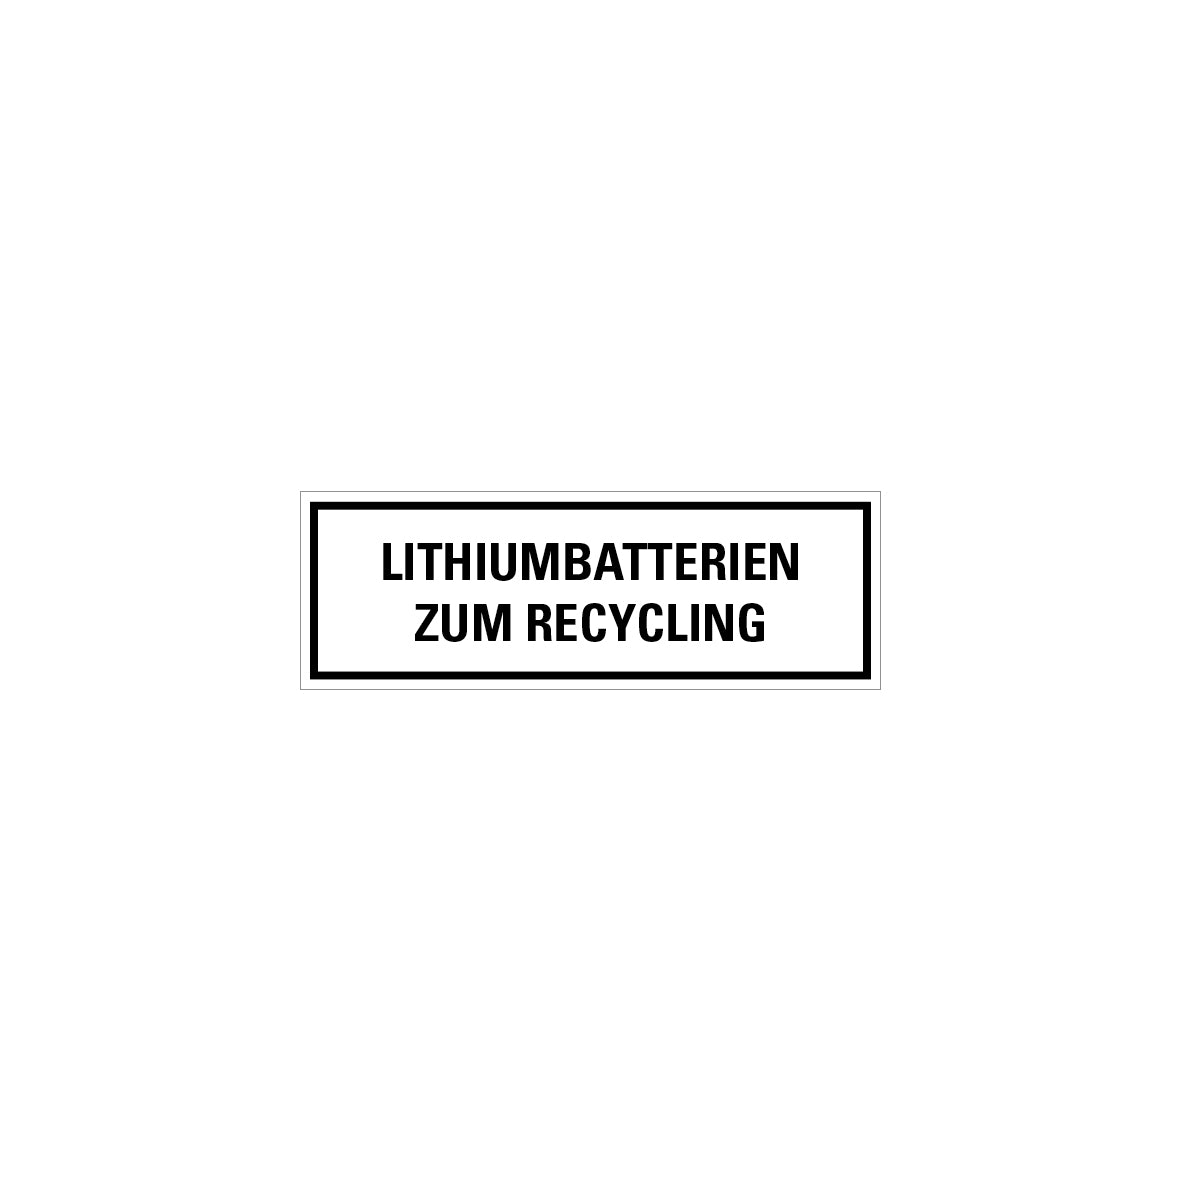 Gefahrstoff Batterien, Lithiumbatterien zum Recycling, 5.0410, 150 x 50 mm, Ro 500 Stk.